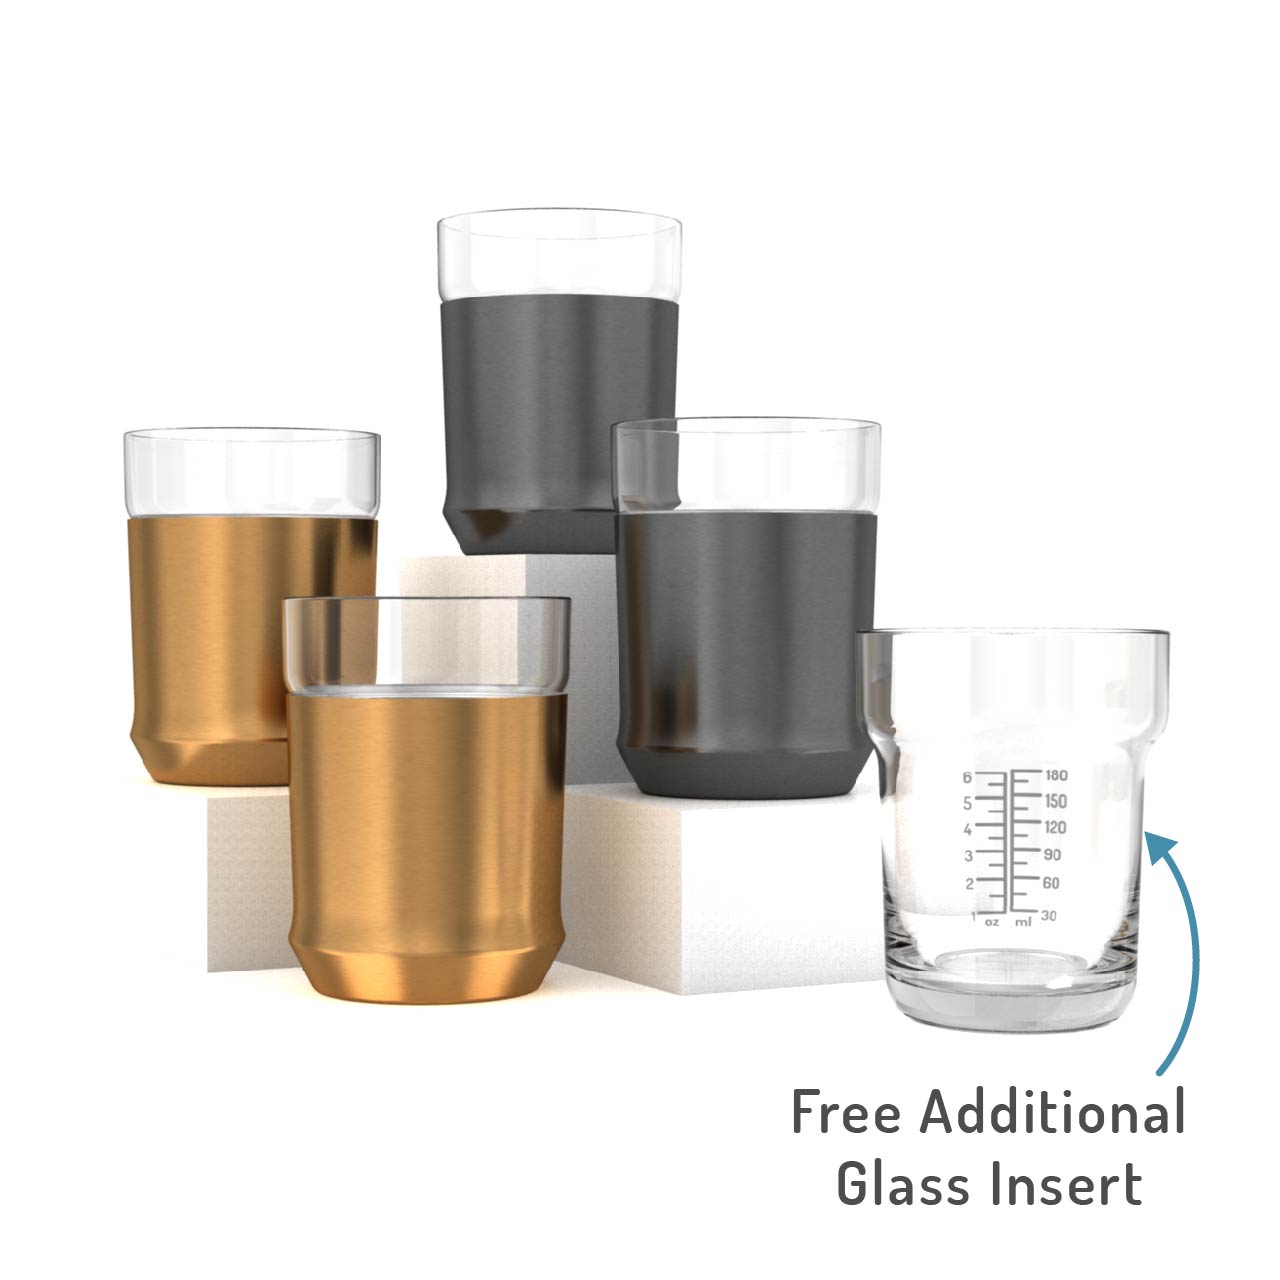 Kasualware™ 14oz. Doublewall Set of 4 Drinking Glasses - 7624572